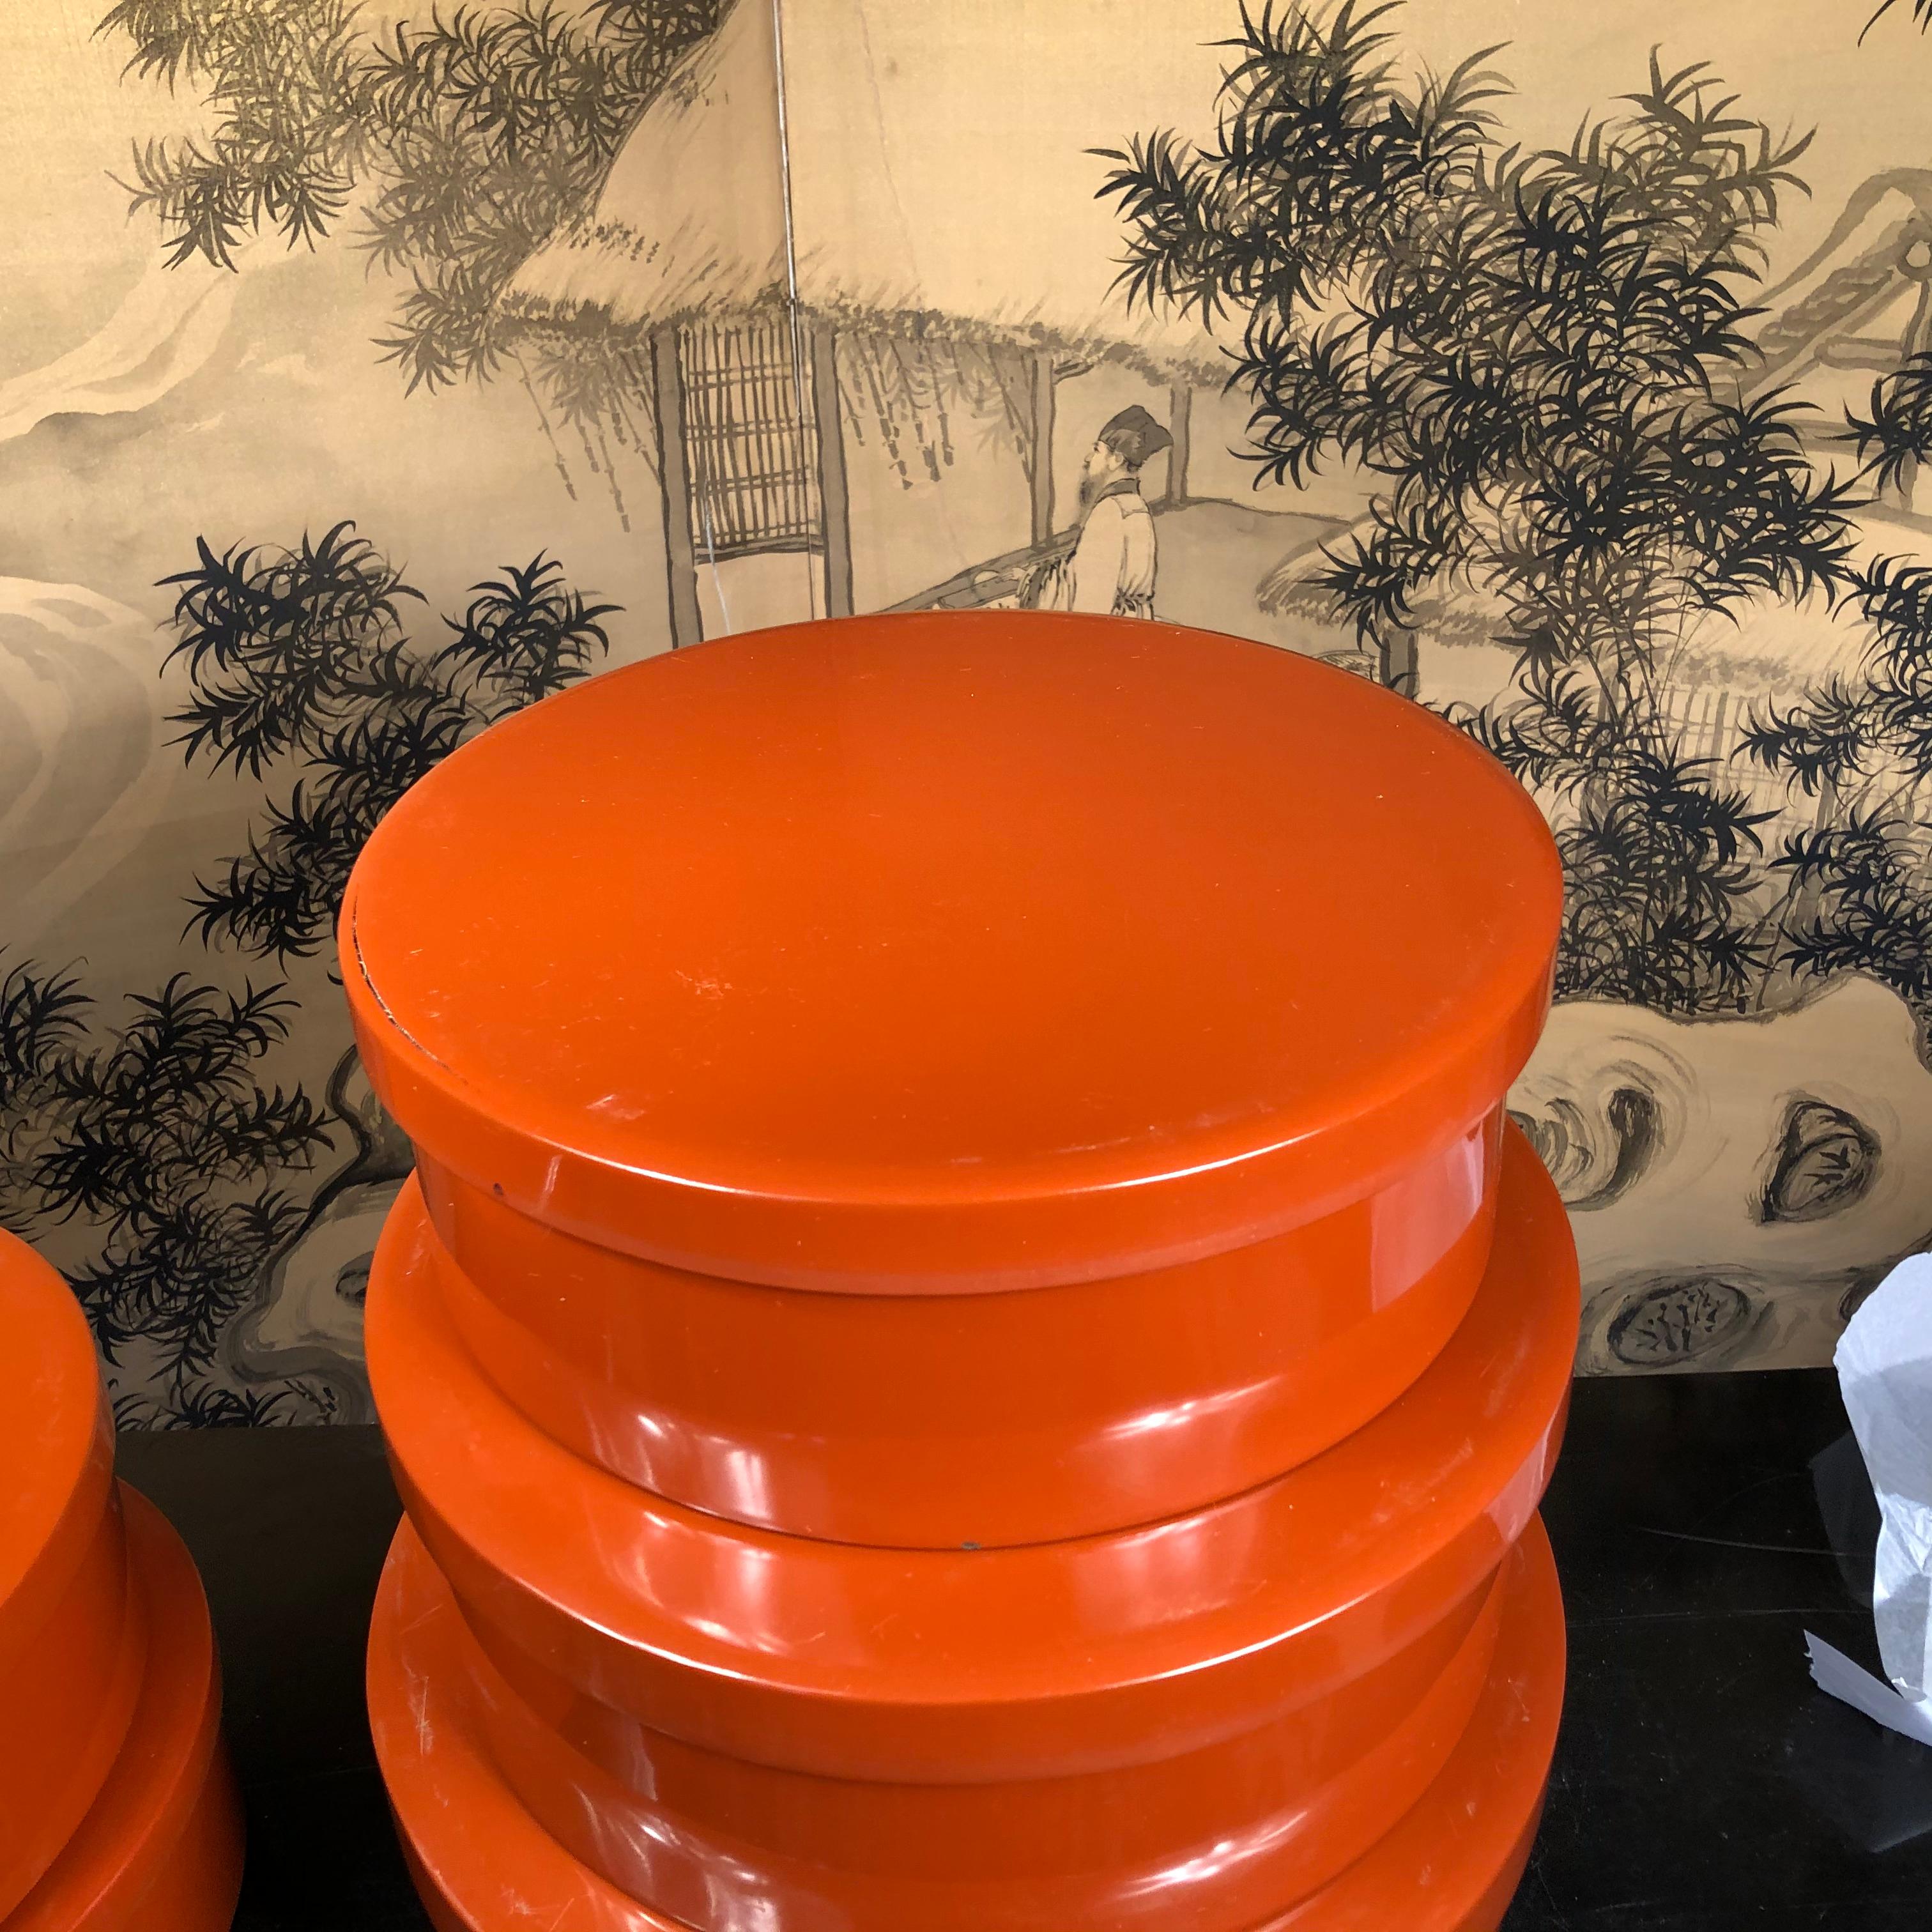 japanese stacking bowls